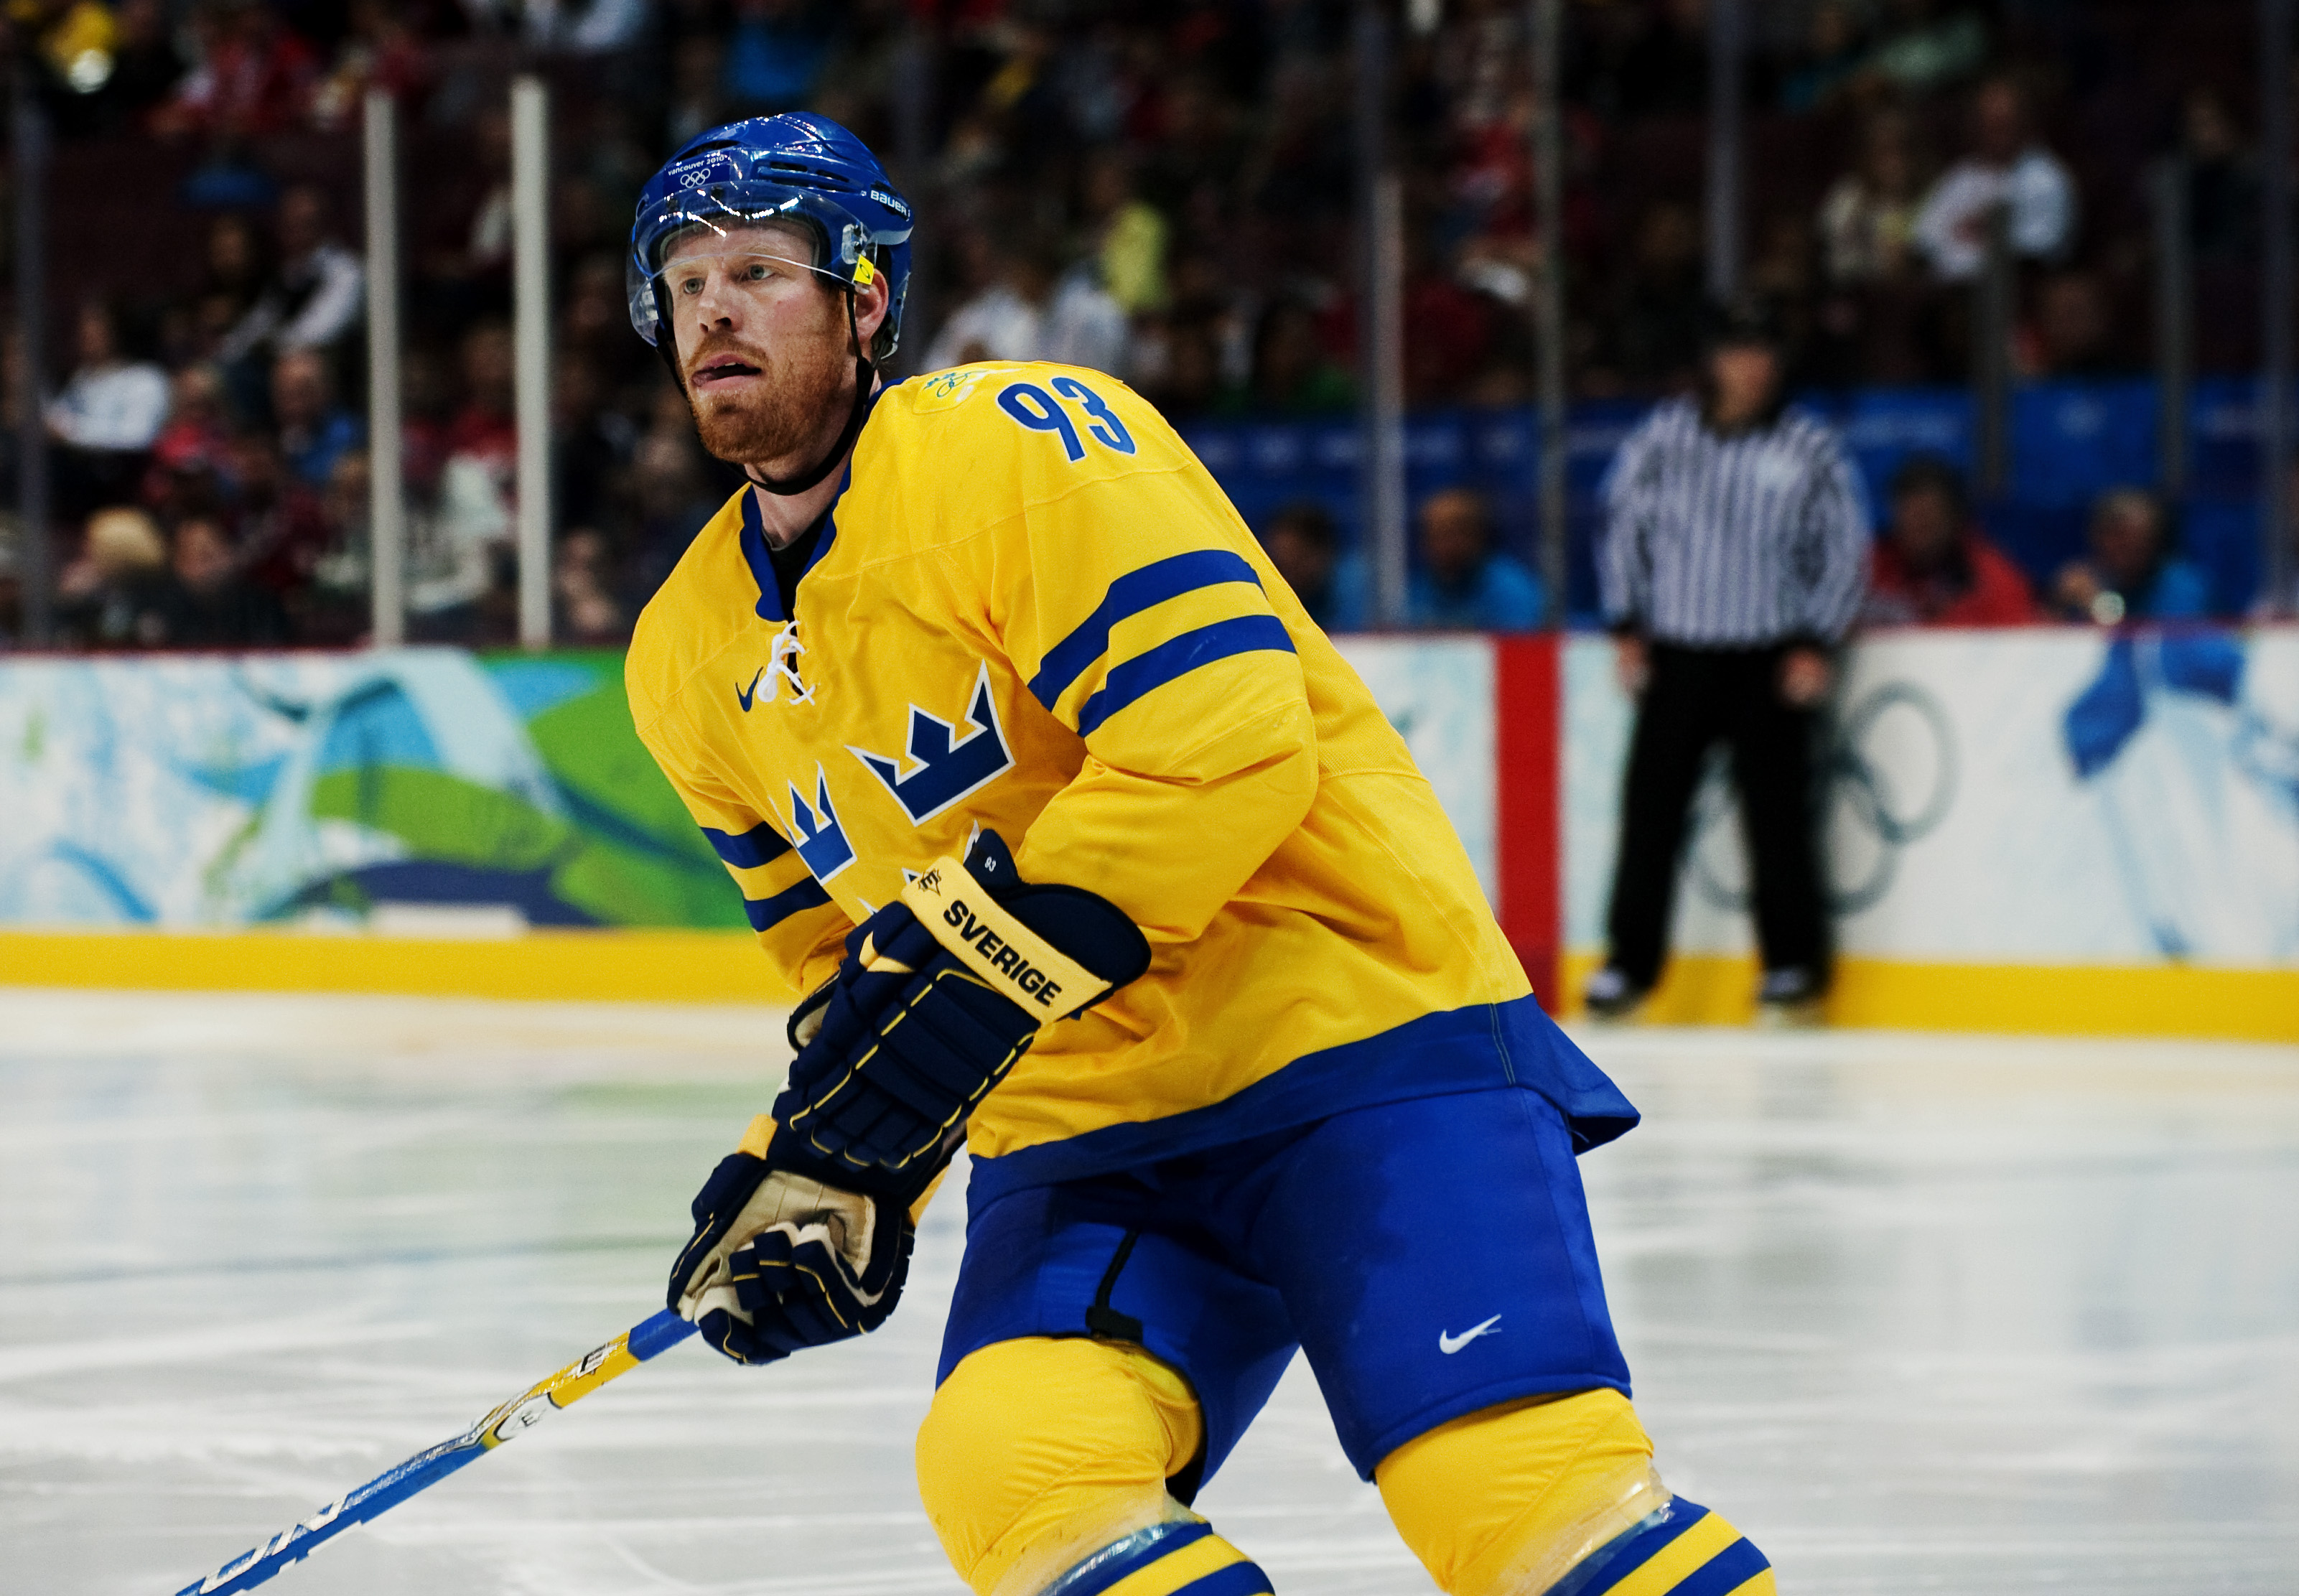 Senast Johan Franzén representerade Tre Kronor var i Vancouver-OS 2010.